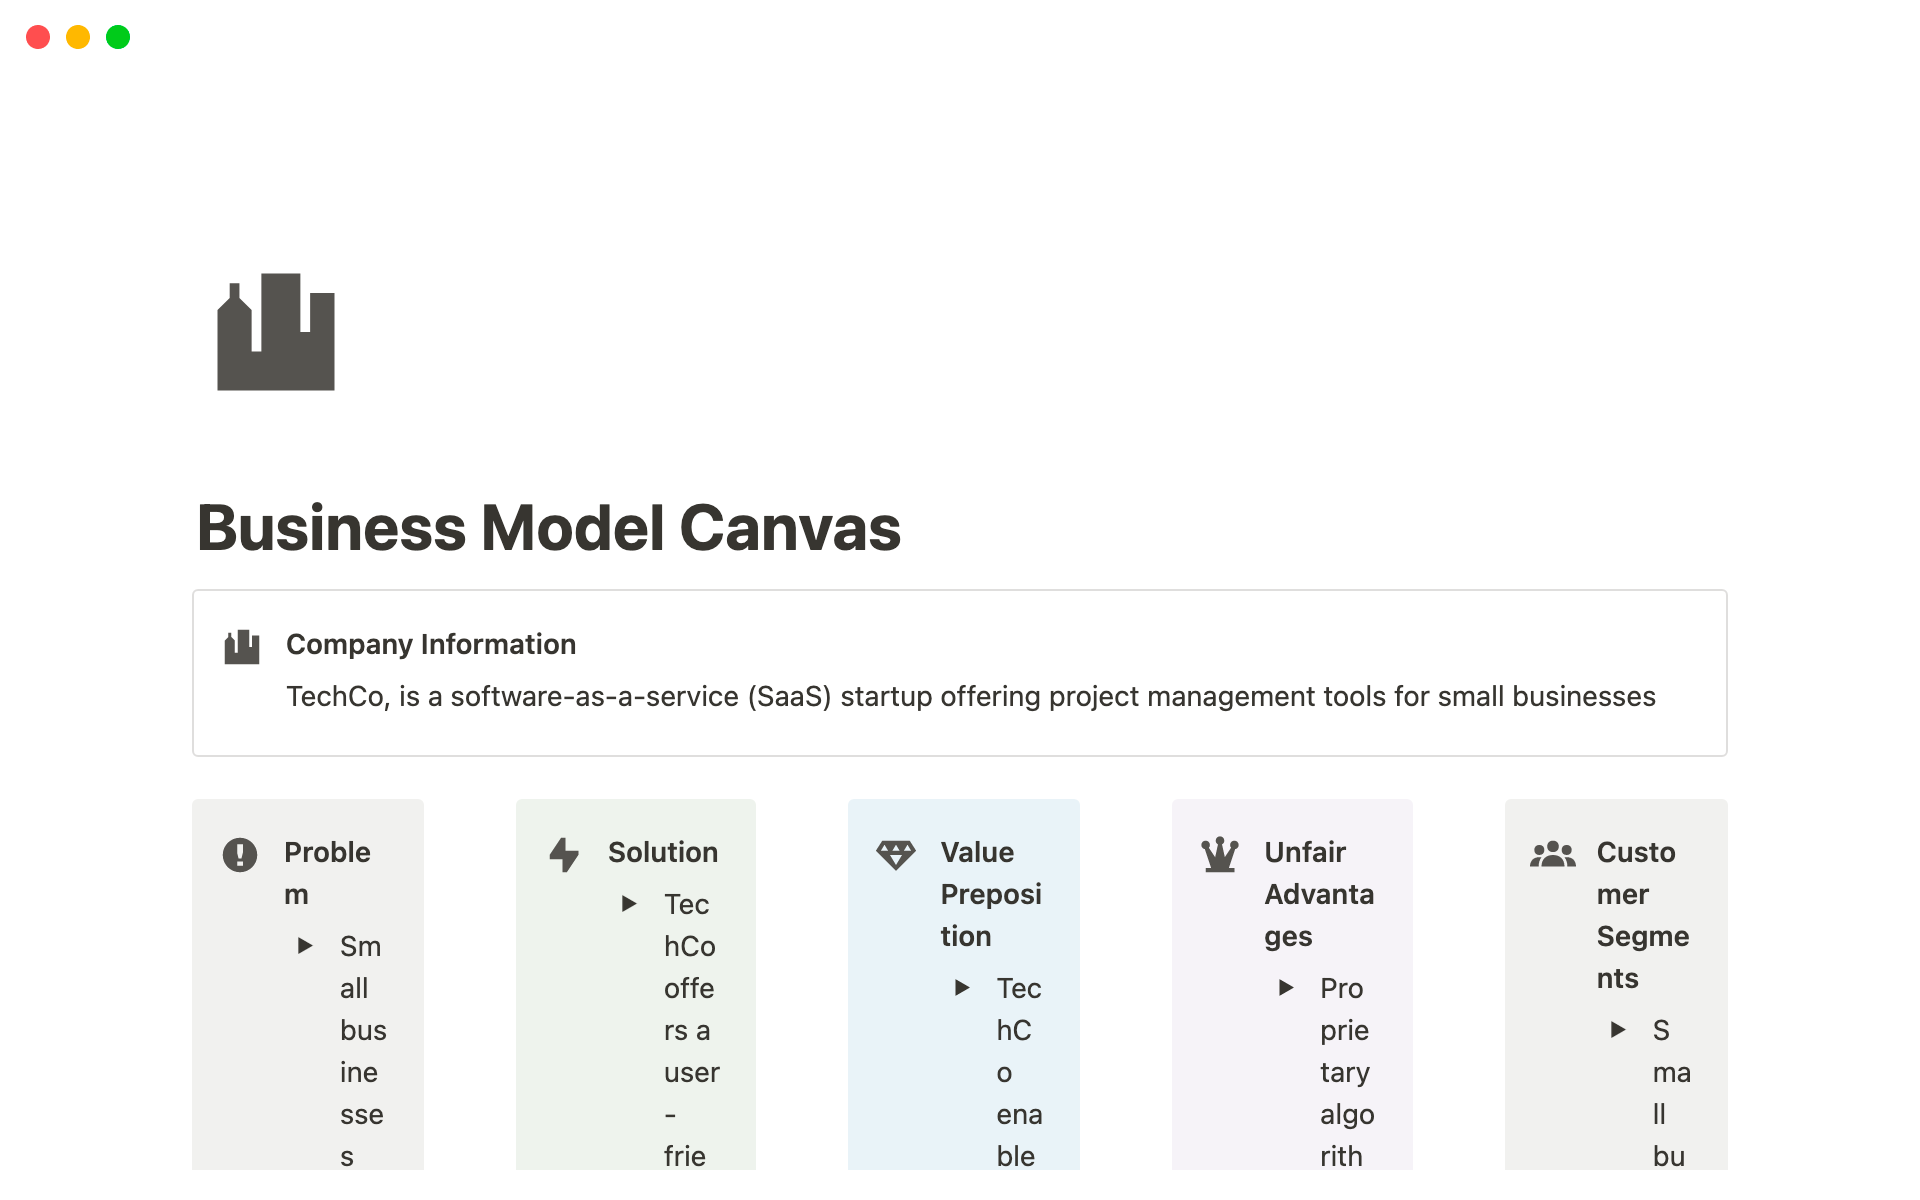 Business Model Canvas